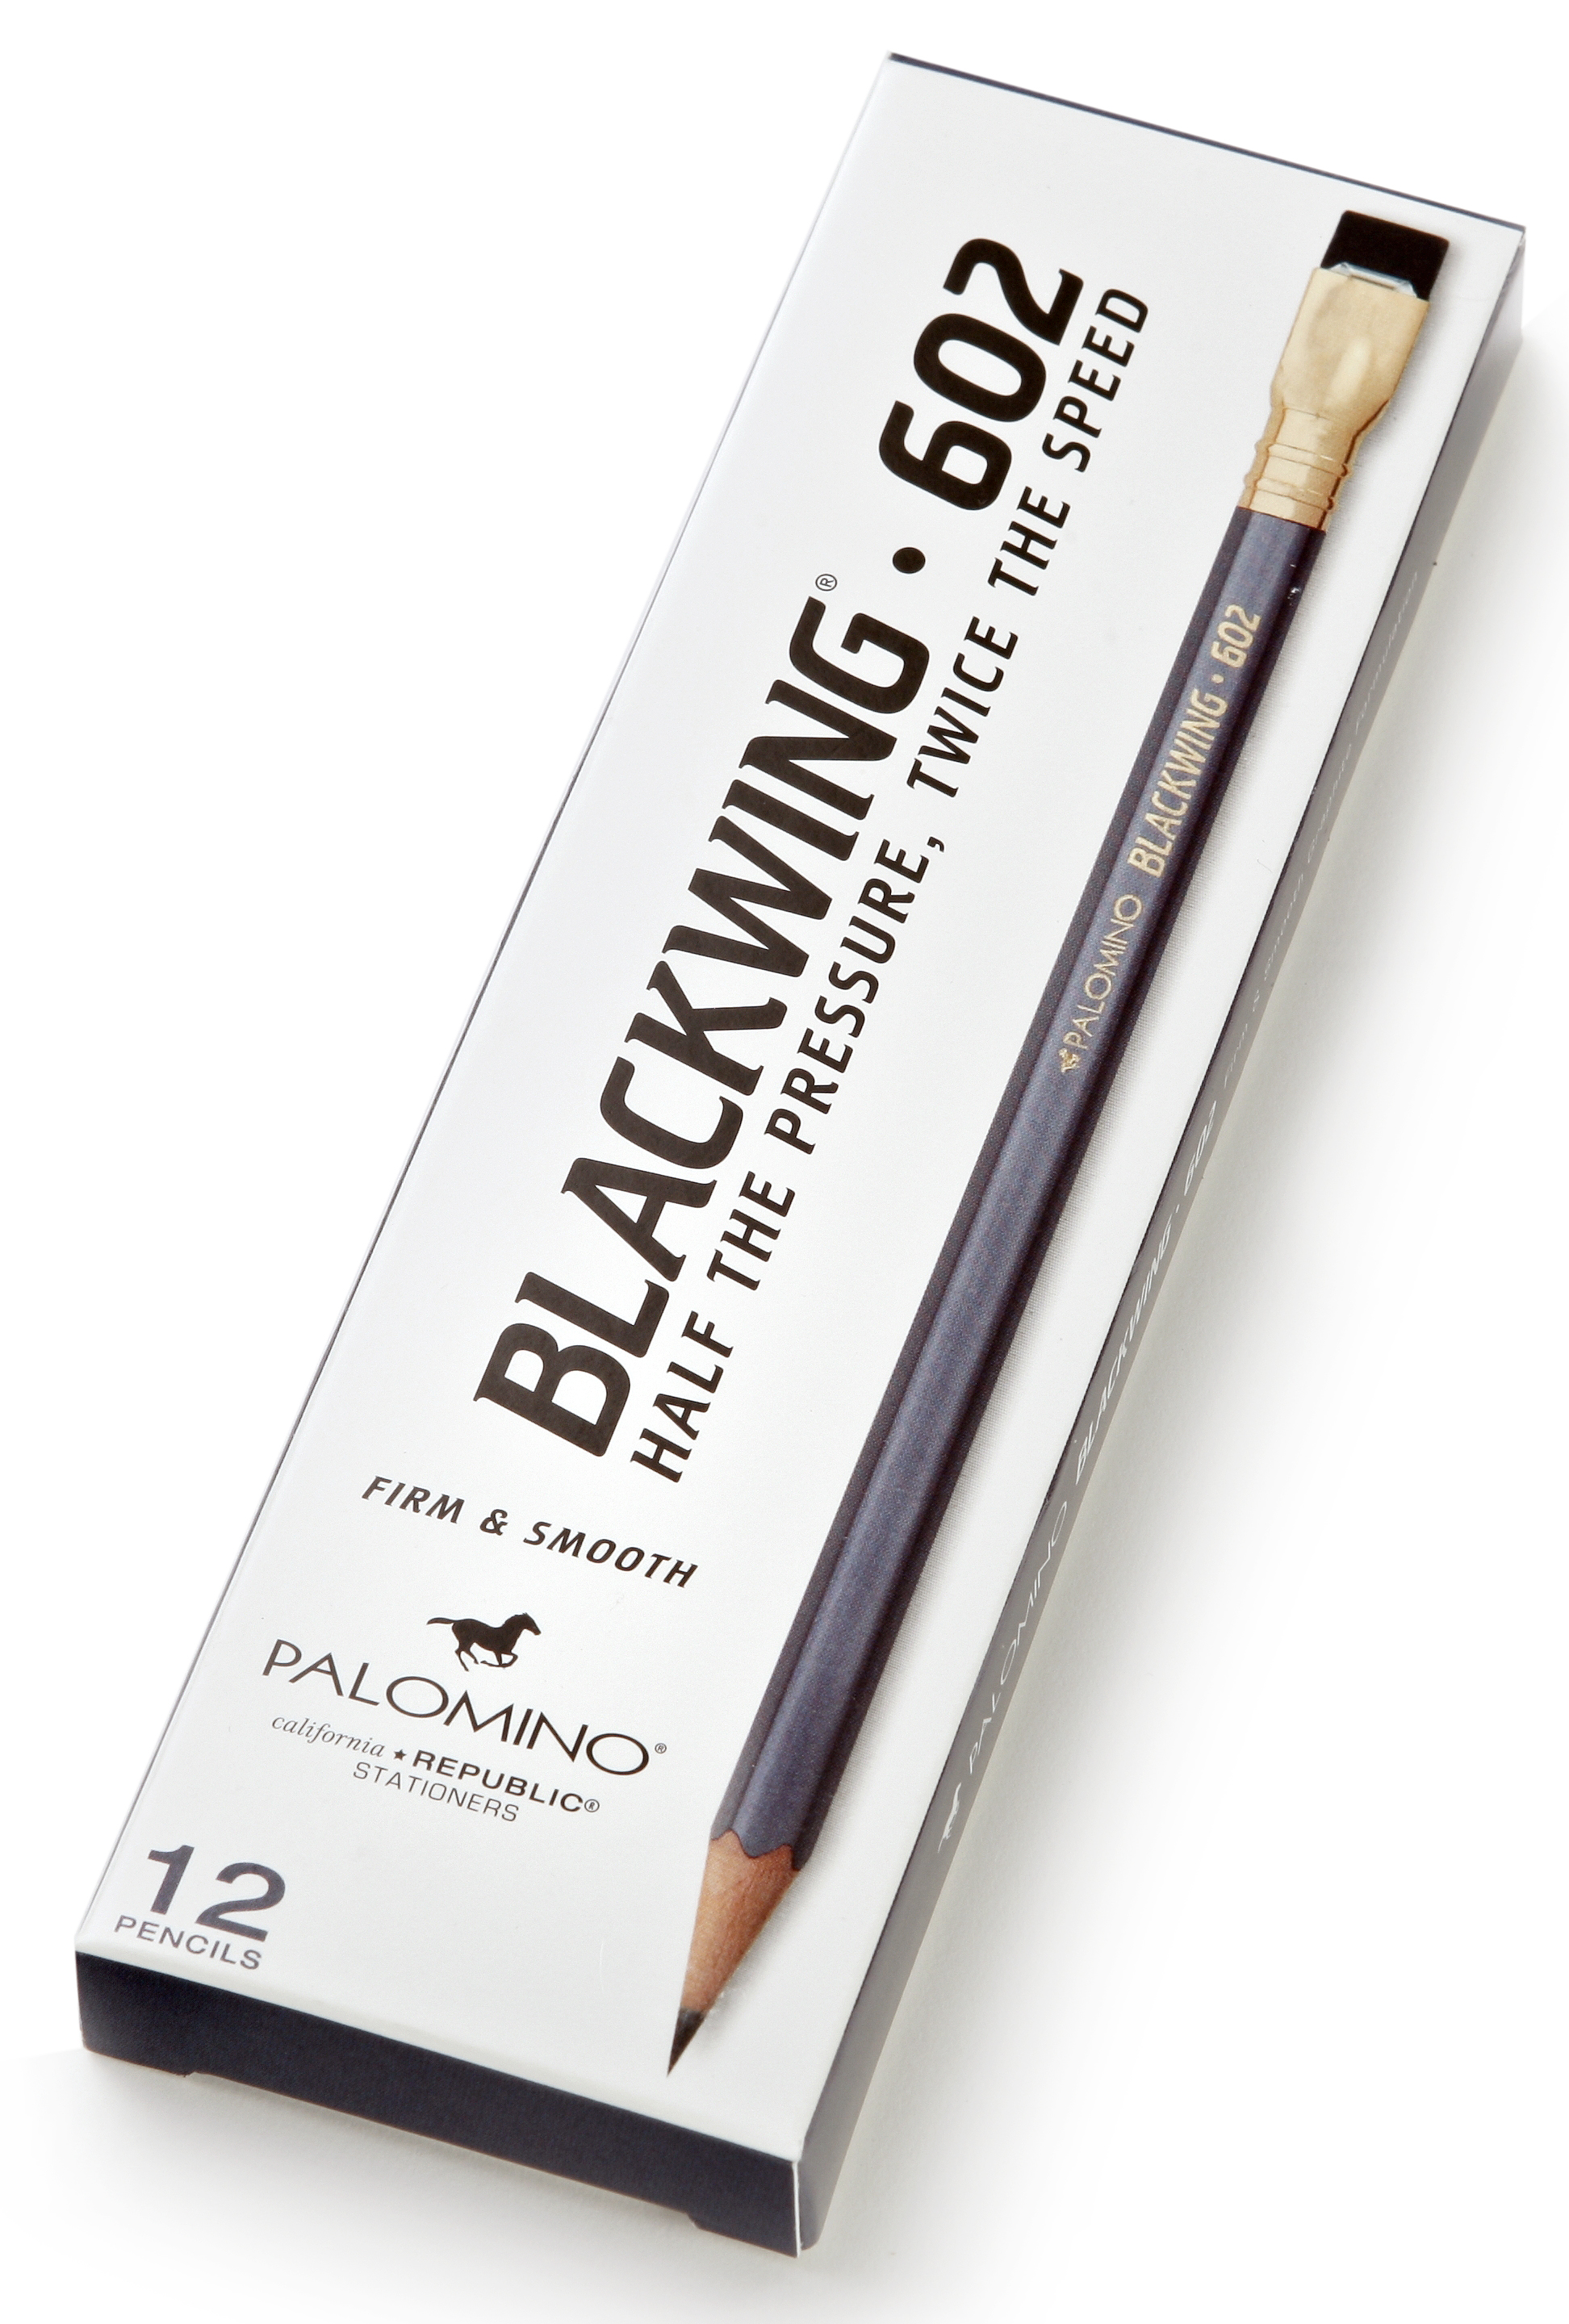 Blackwing 602 by Palomino (Pony Logo) by Palomino | Brand Name Pencils